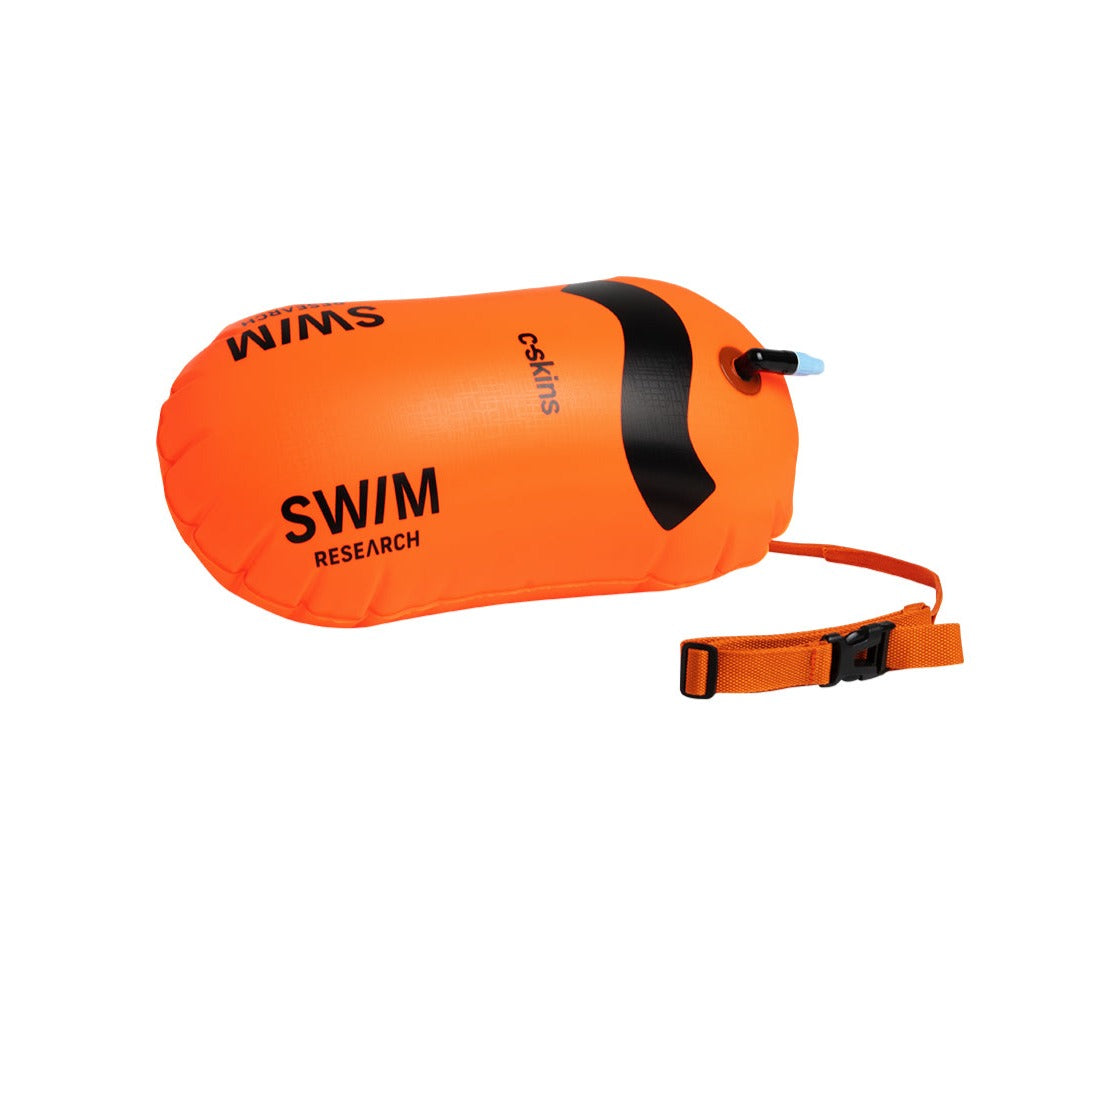 c-skins-swim-research-tow-float-safety-swim-float-orange-galway-ireland-blacksheepsurfco